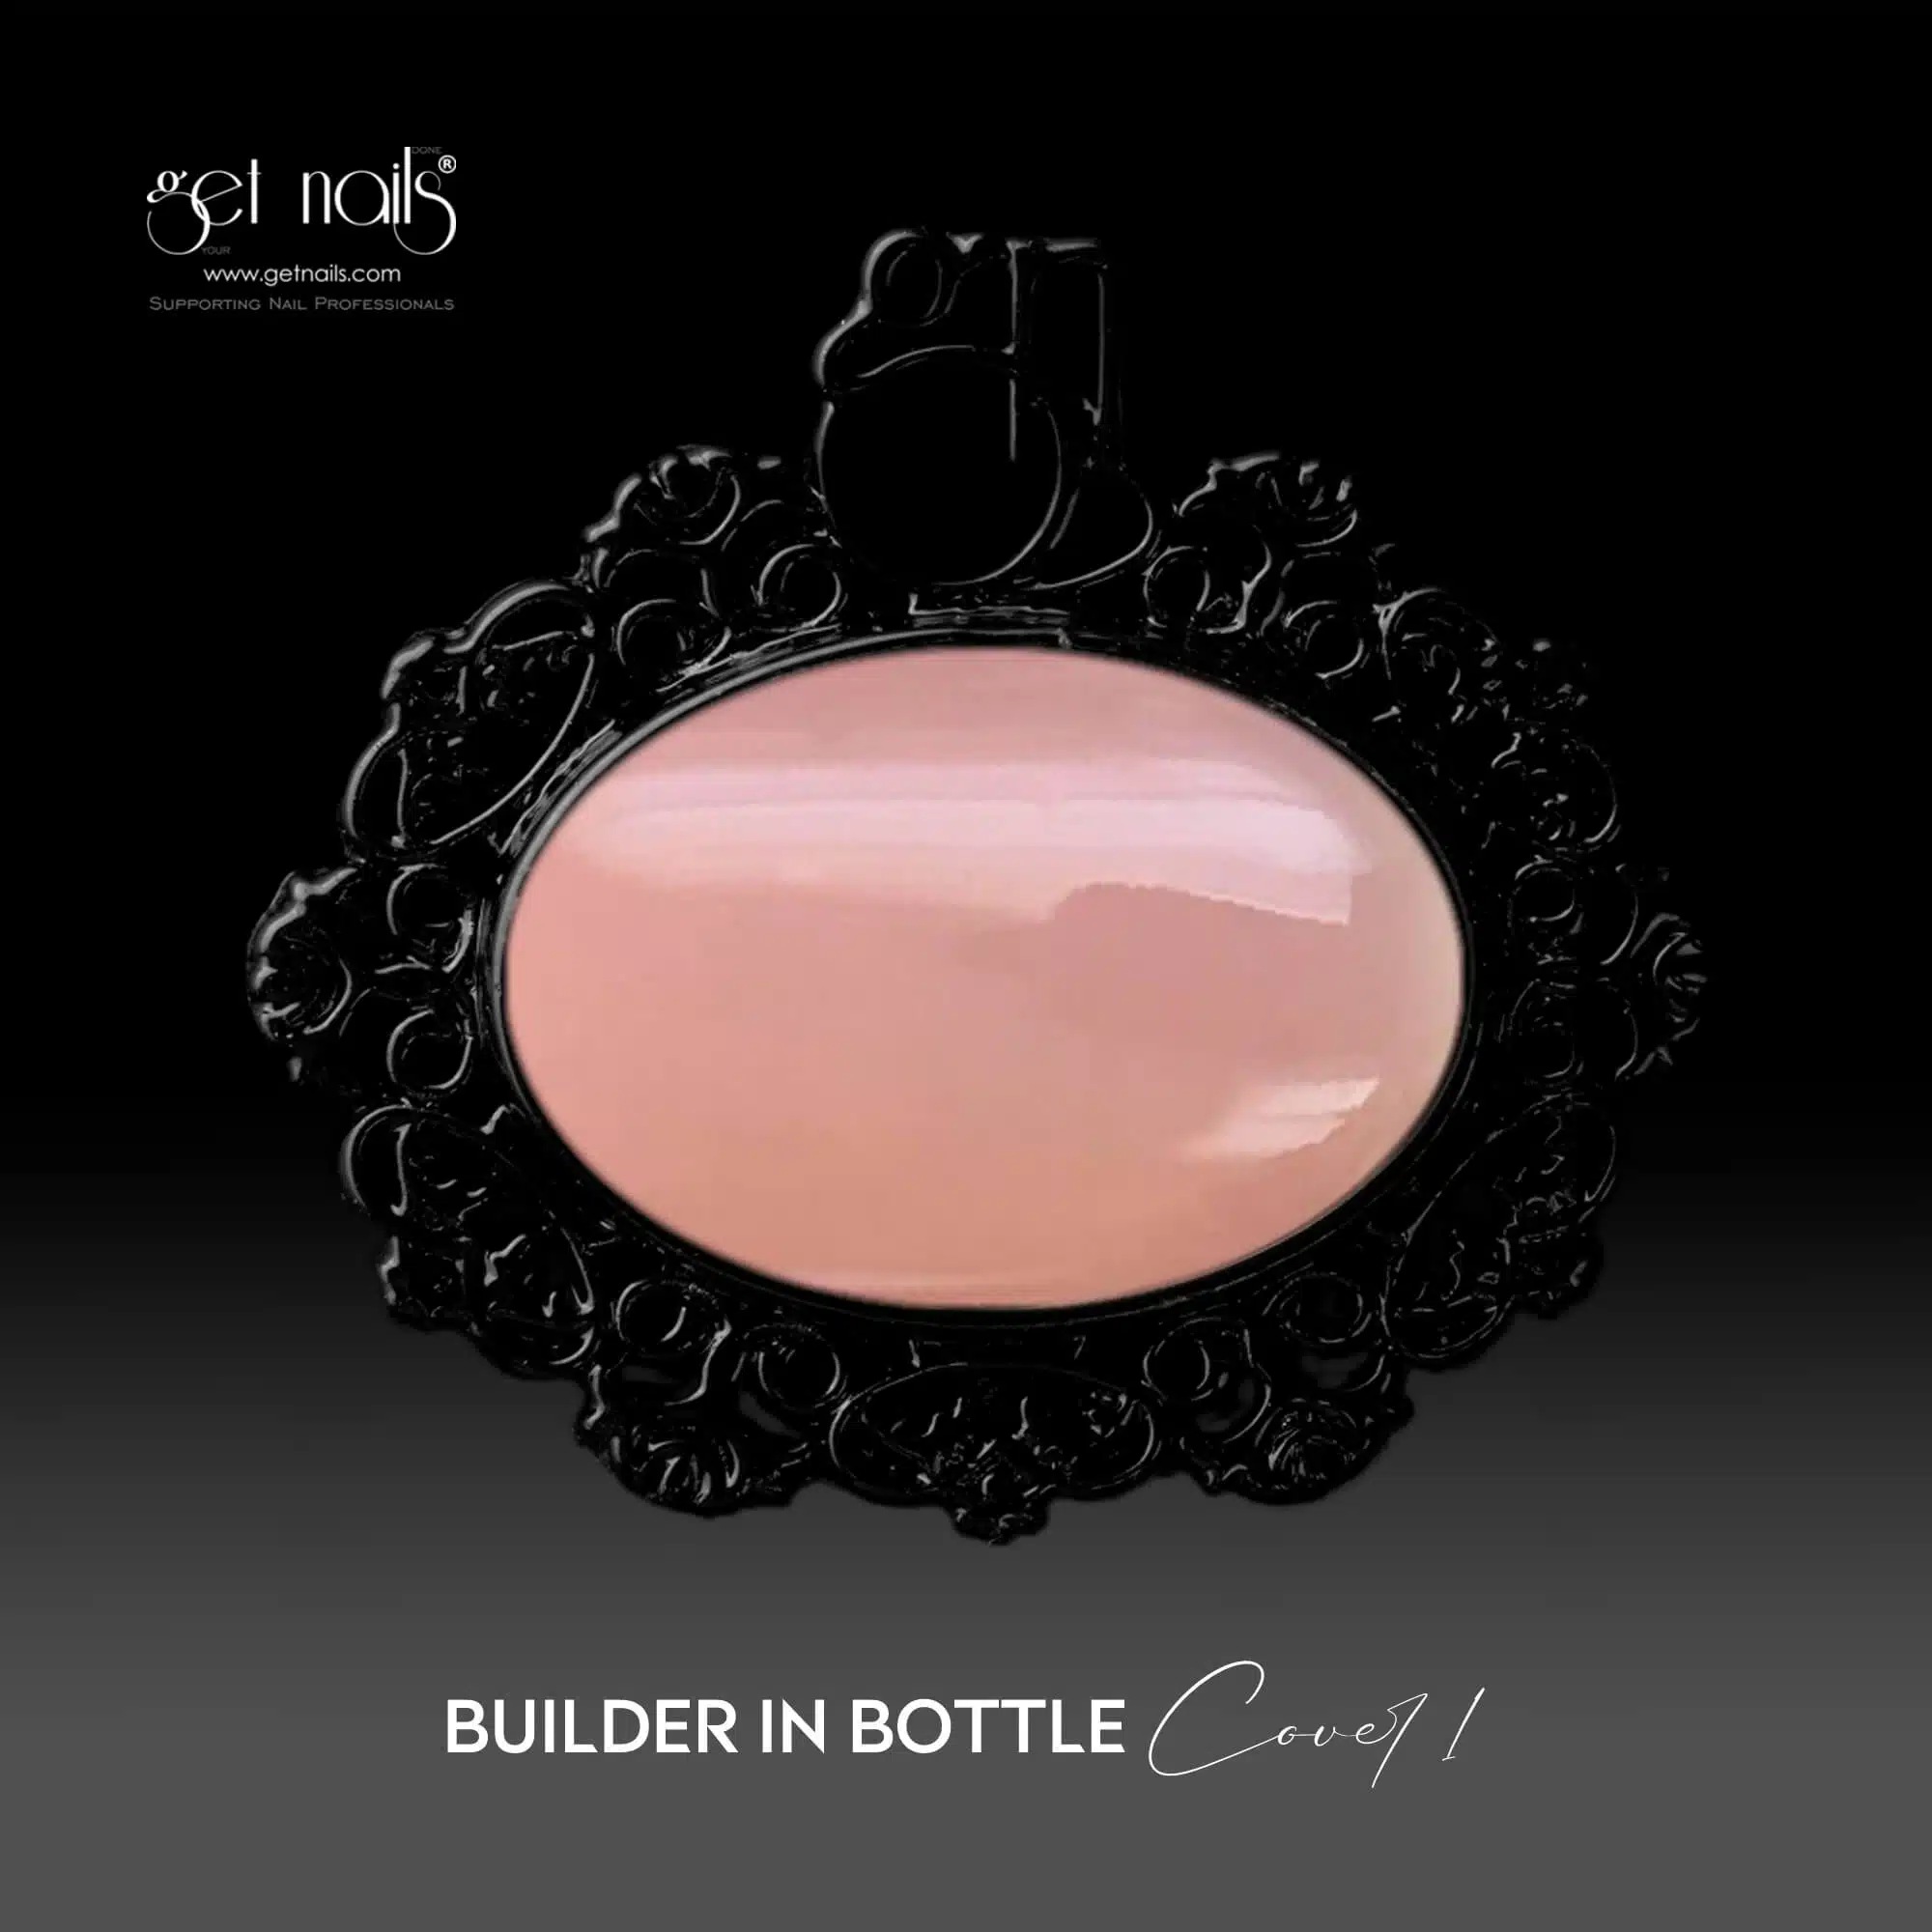 Get Nails Austria - Builder in Bottle Cover 1 15g